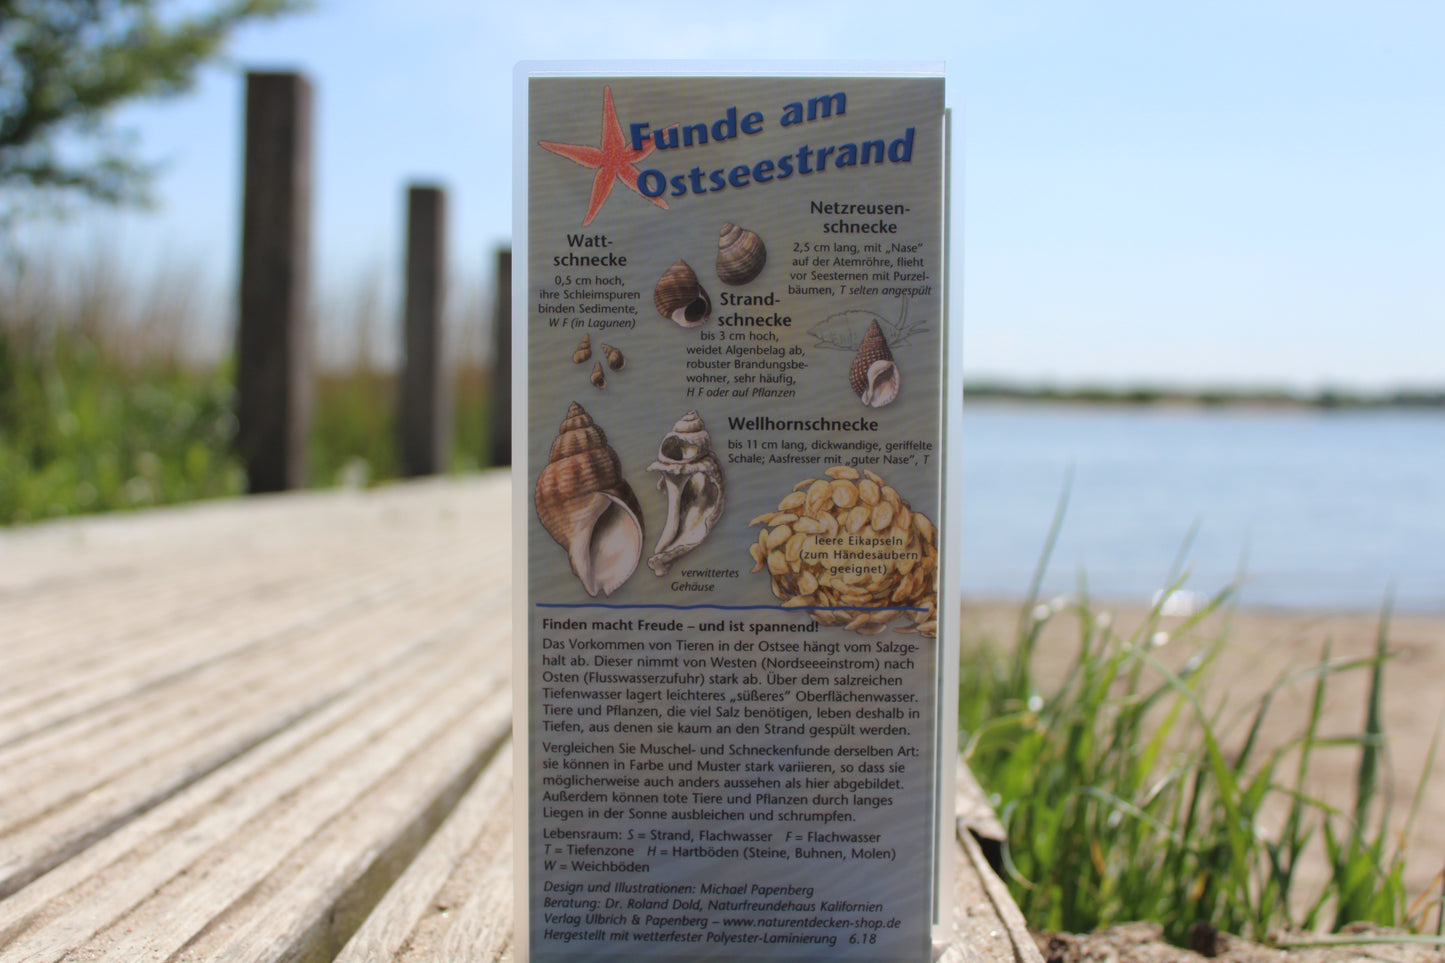 Bestimmungskarte "Funde am Ostseestrand"